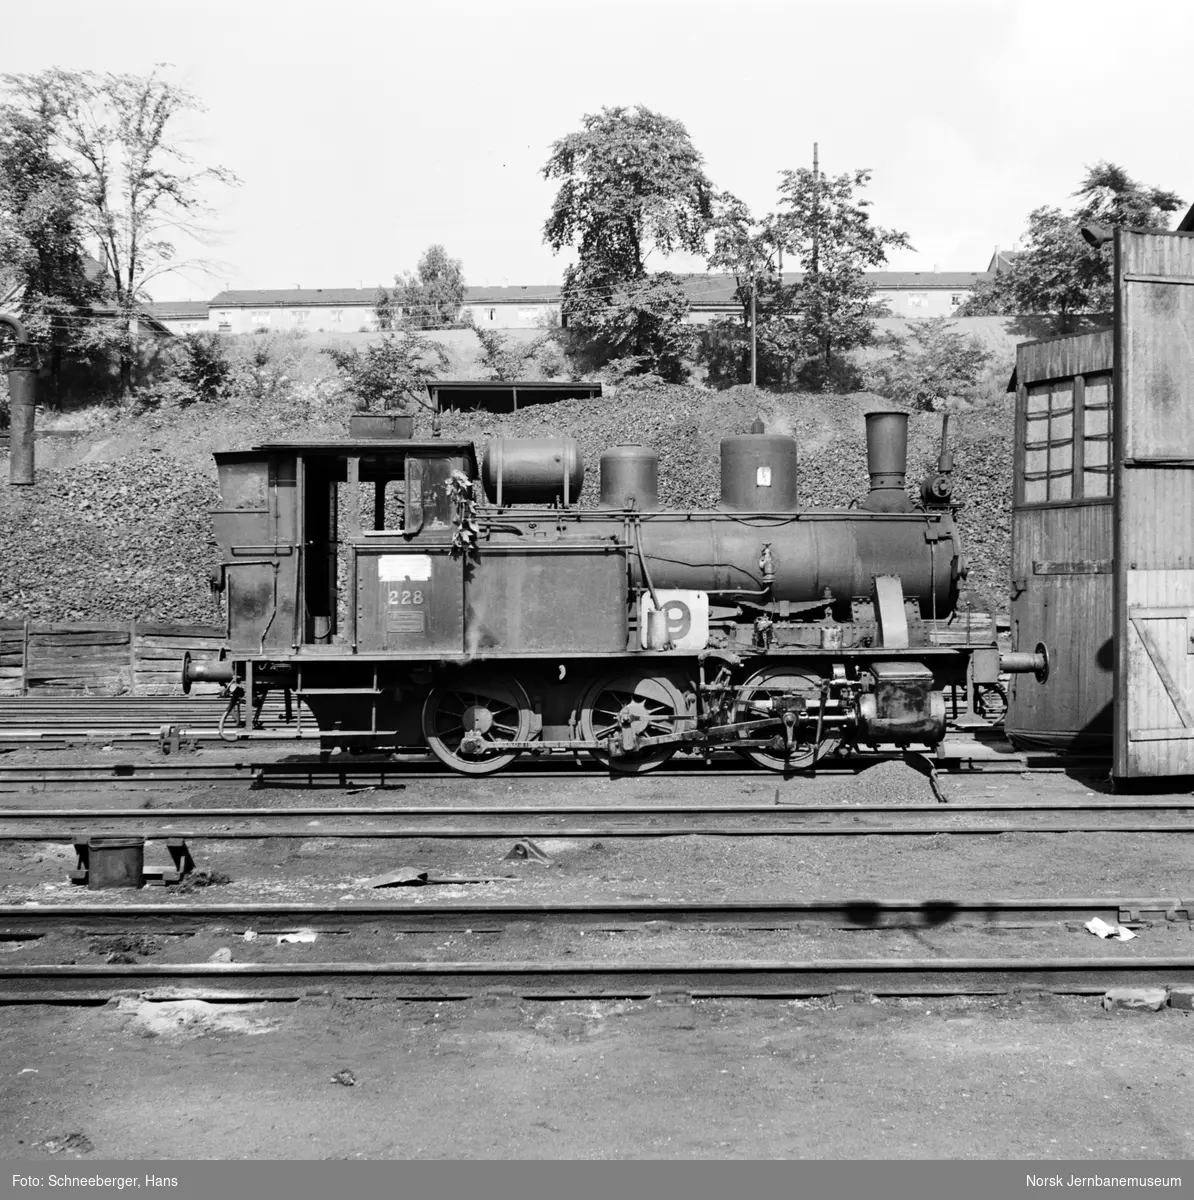 Damplokomotiv type 25a nr. 228 i skiftetjeneste utenfor Gamlestallen i Lodalen i Oslo